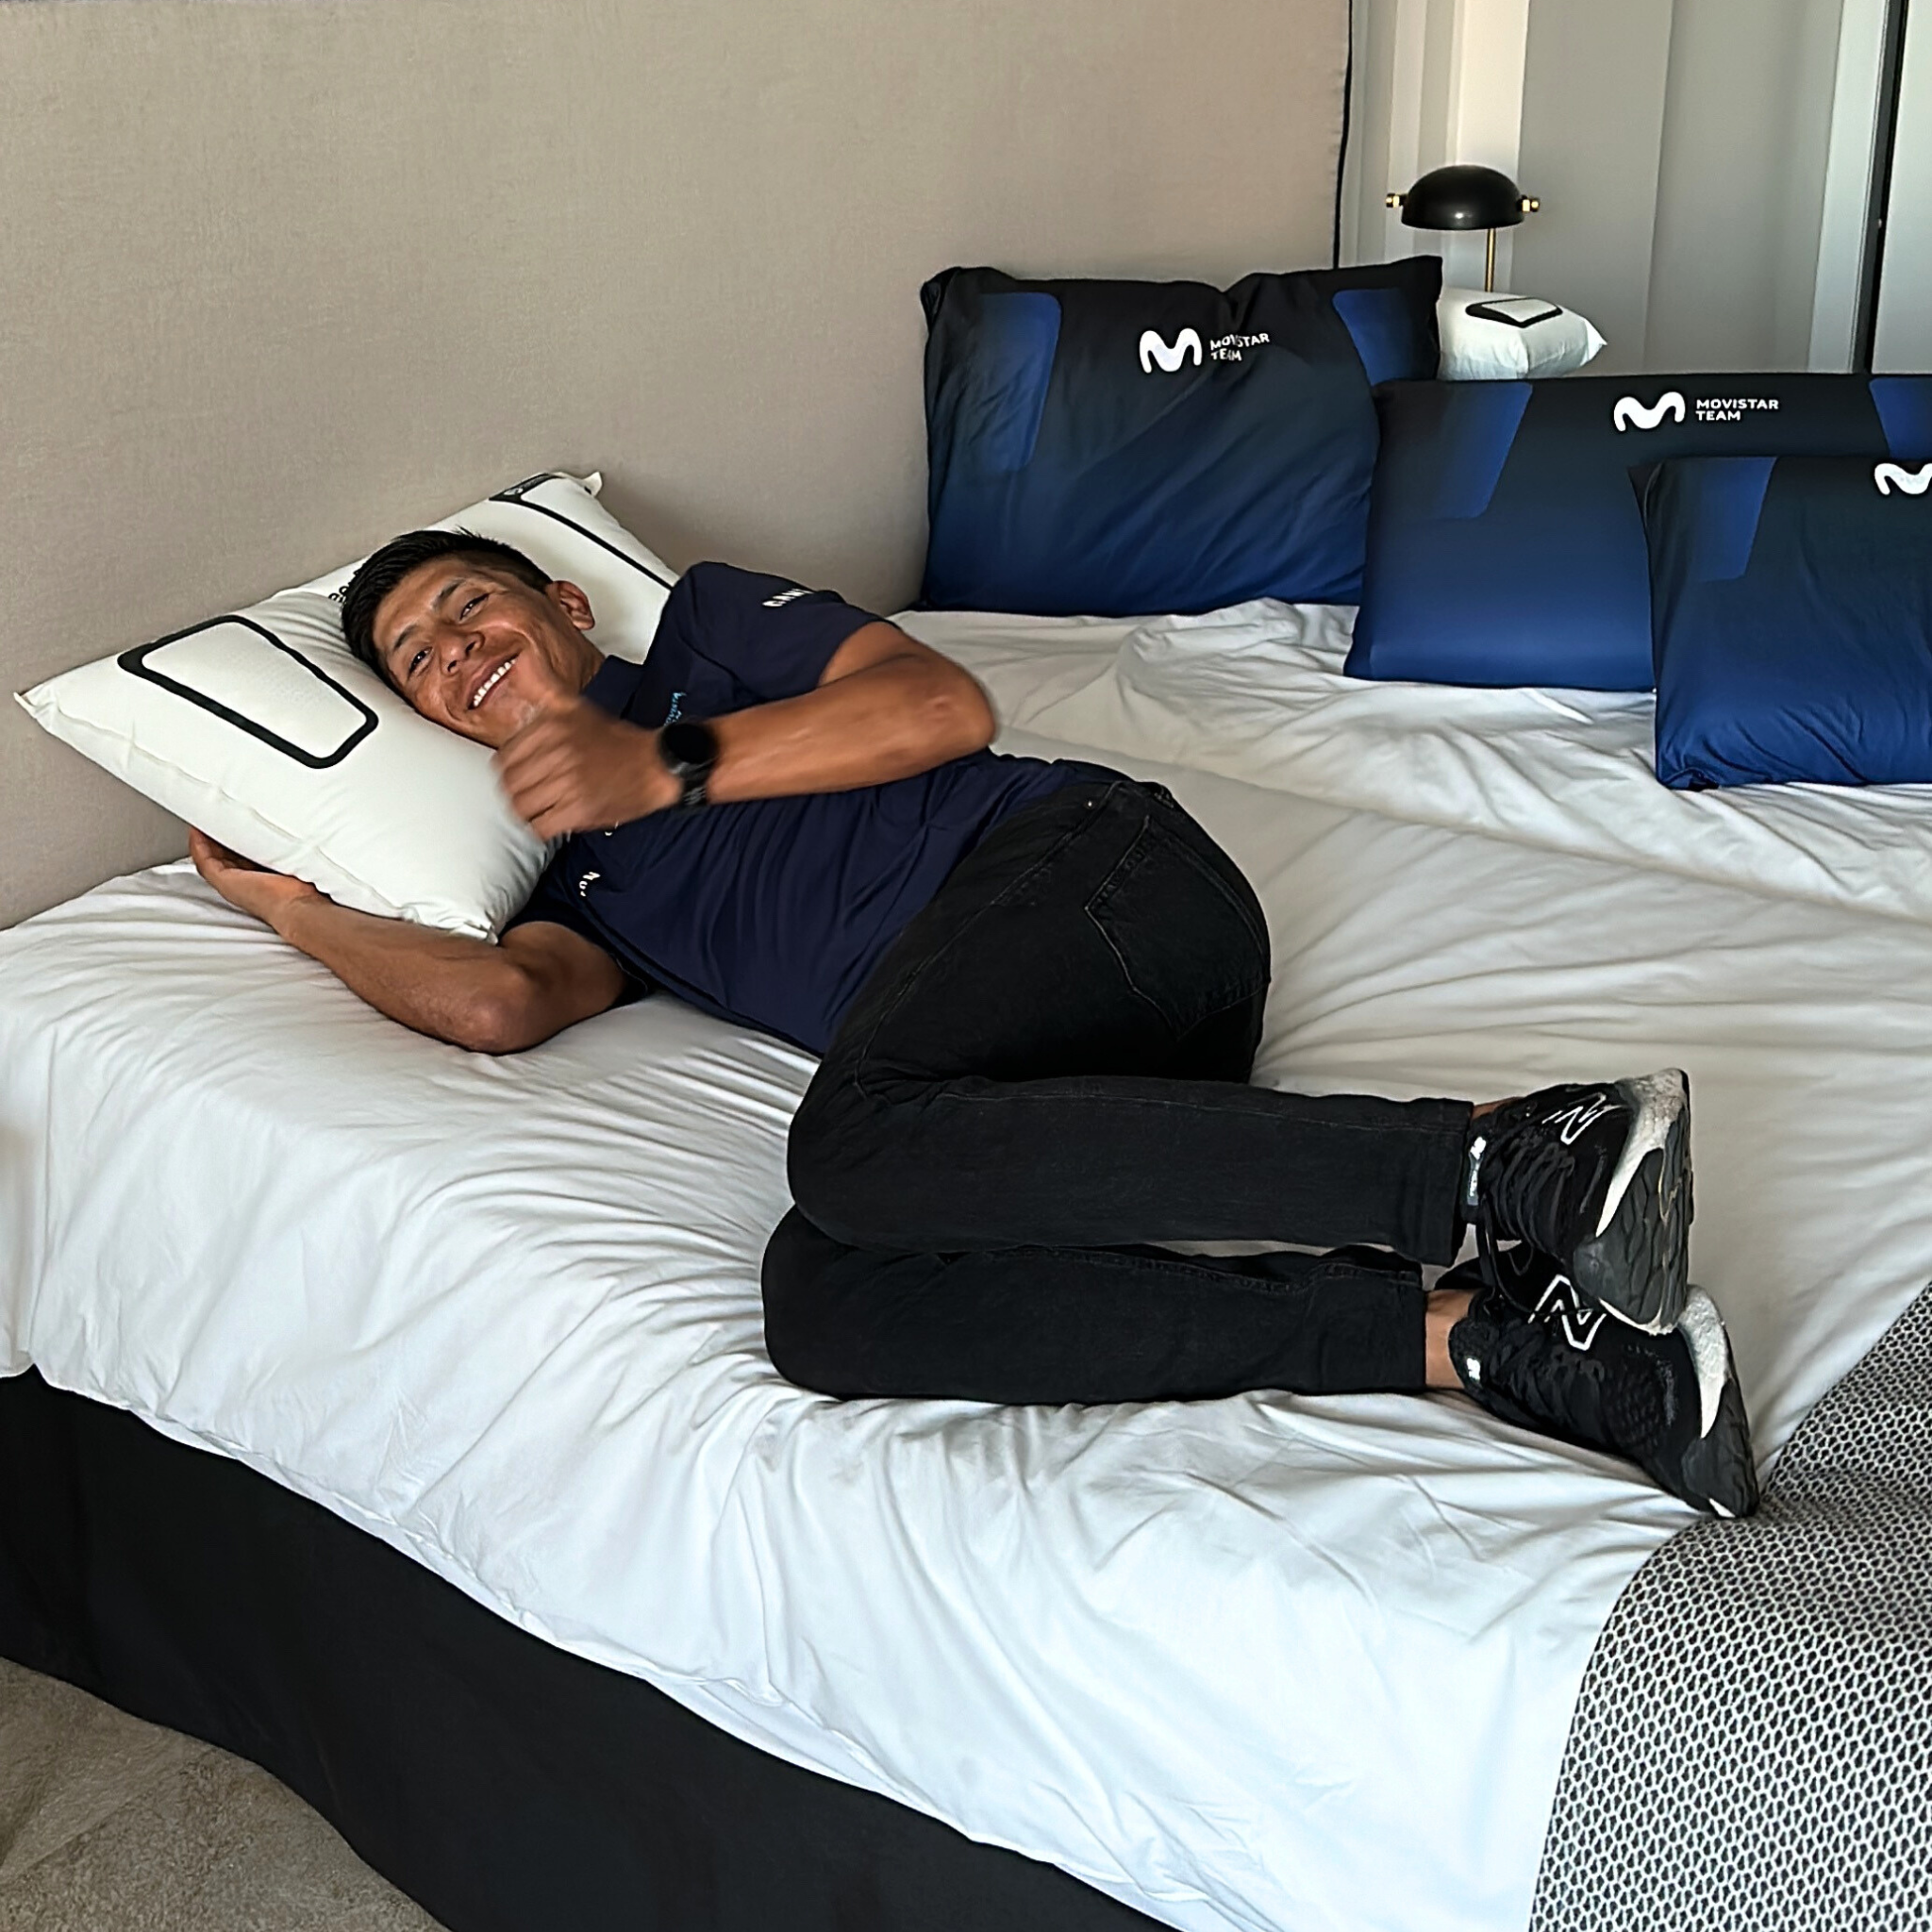 Nairo Quintana from the Movistar Team at the SleepAngel pillow fitting